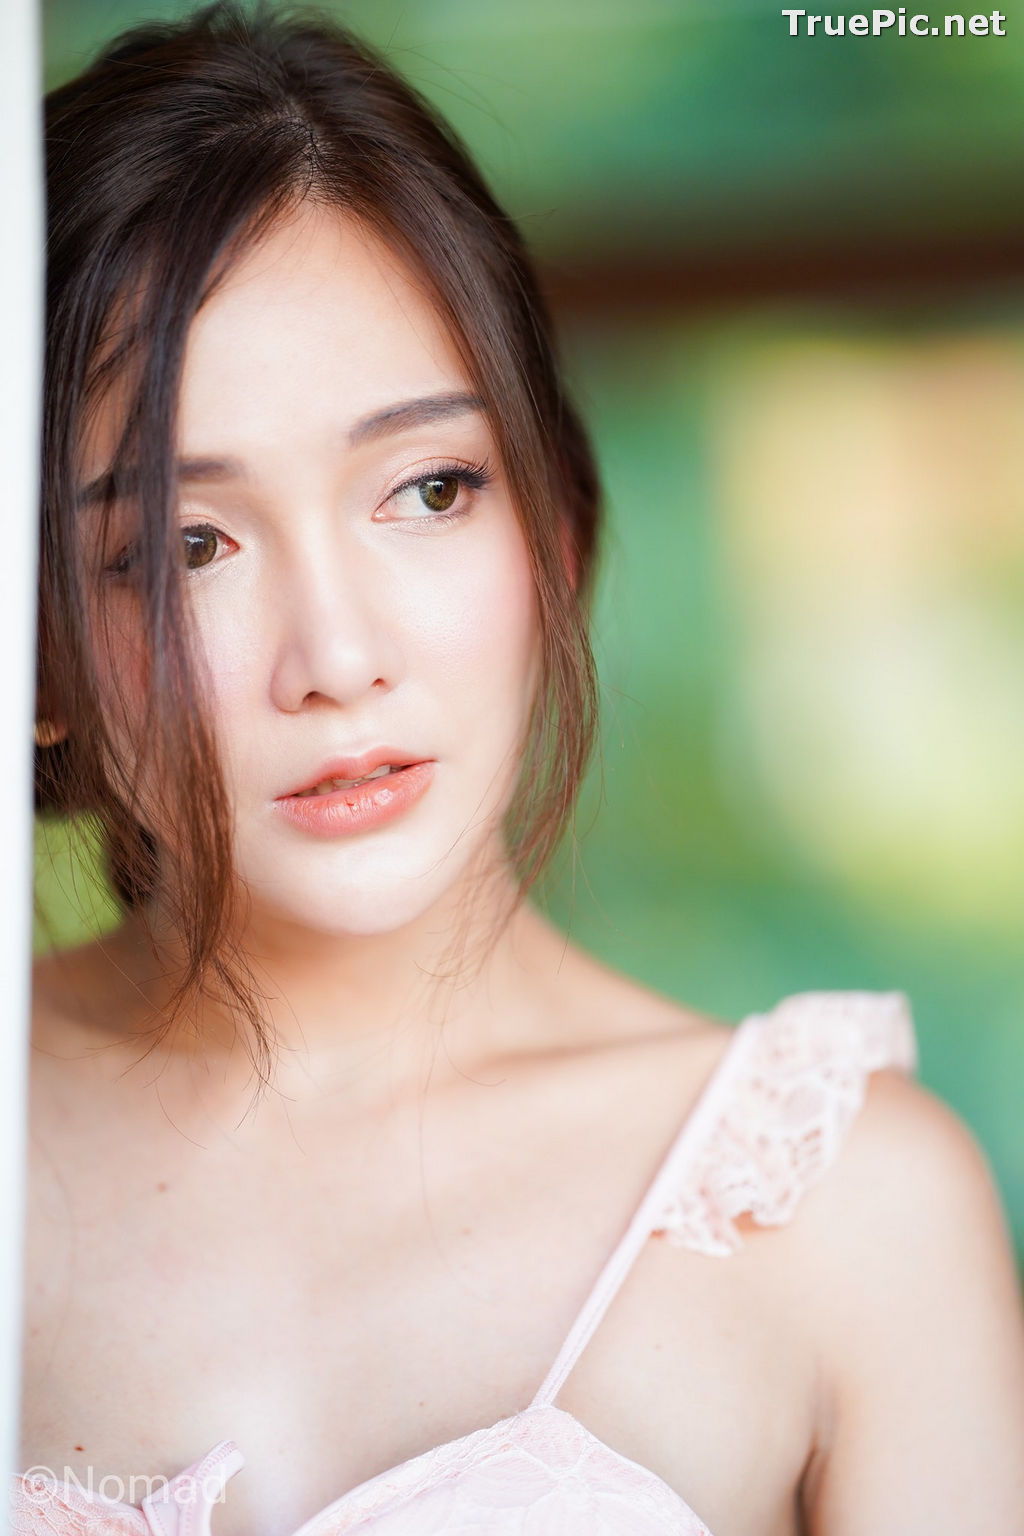 Image Thailand Model - Rossarin Klinhom - Good Morning My Sweet Angel - TruePic.net - Picture-24